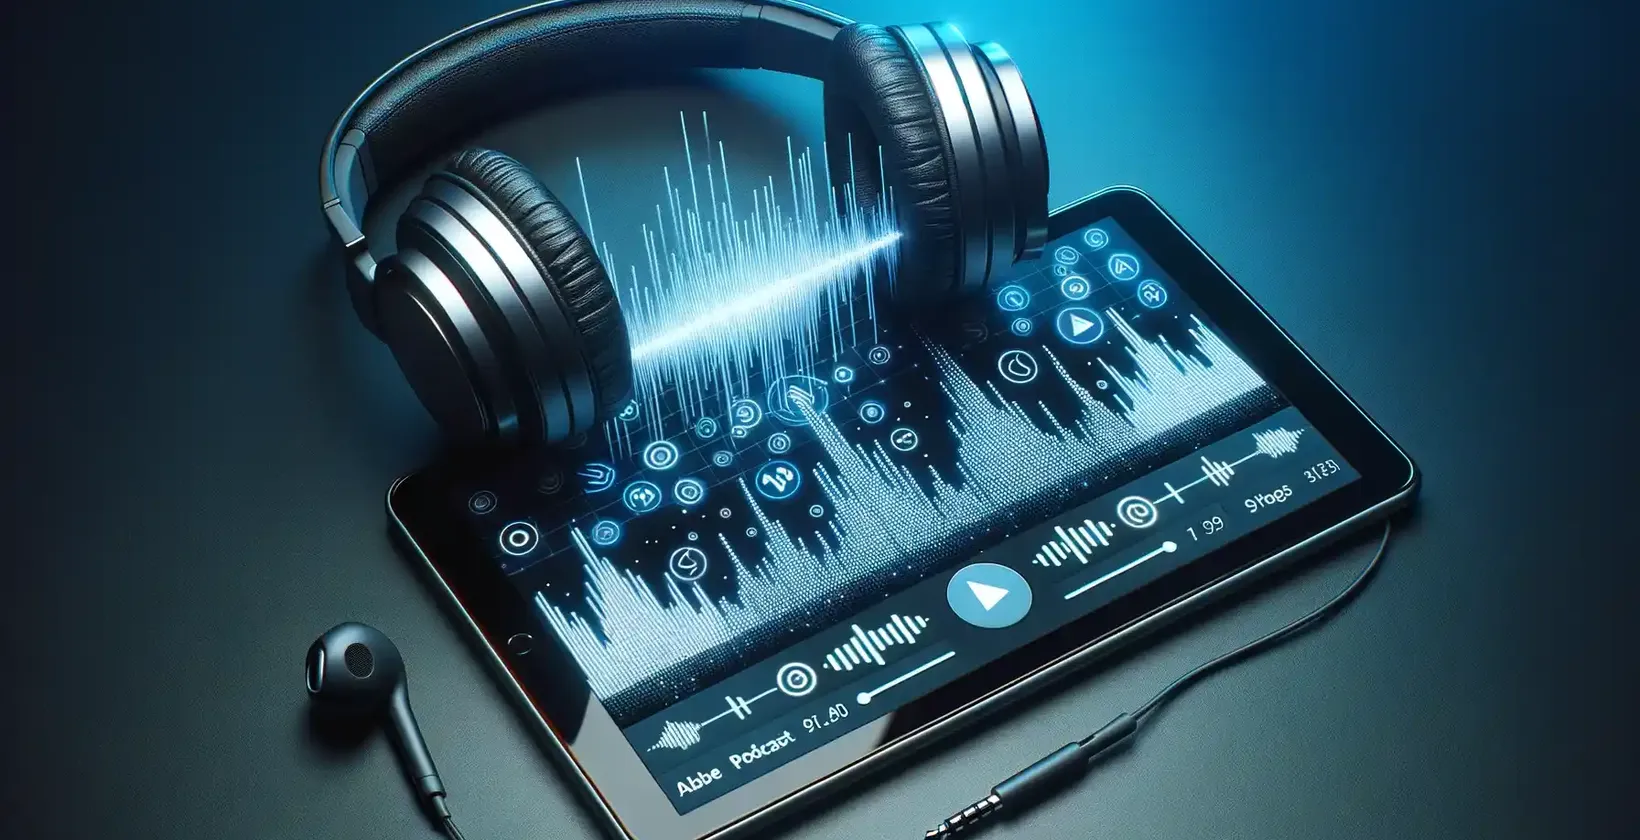 Zaslon tableta živopisno prikazuje zvučne valove, digitalne gumbe i postavke na tamnoplavoj pozadini